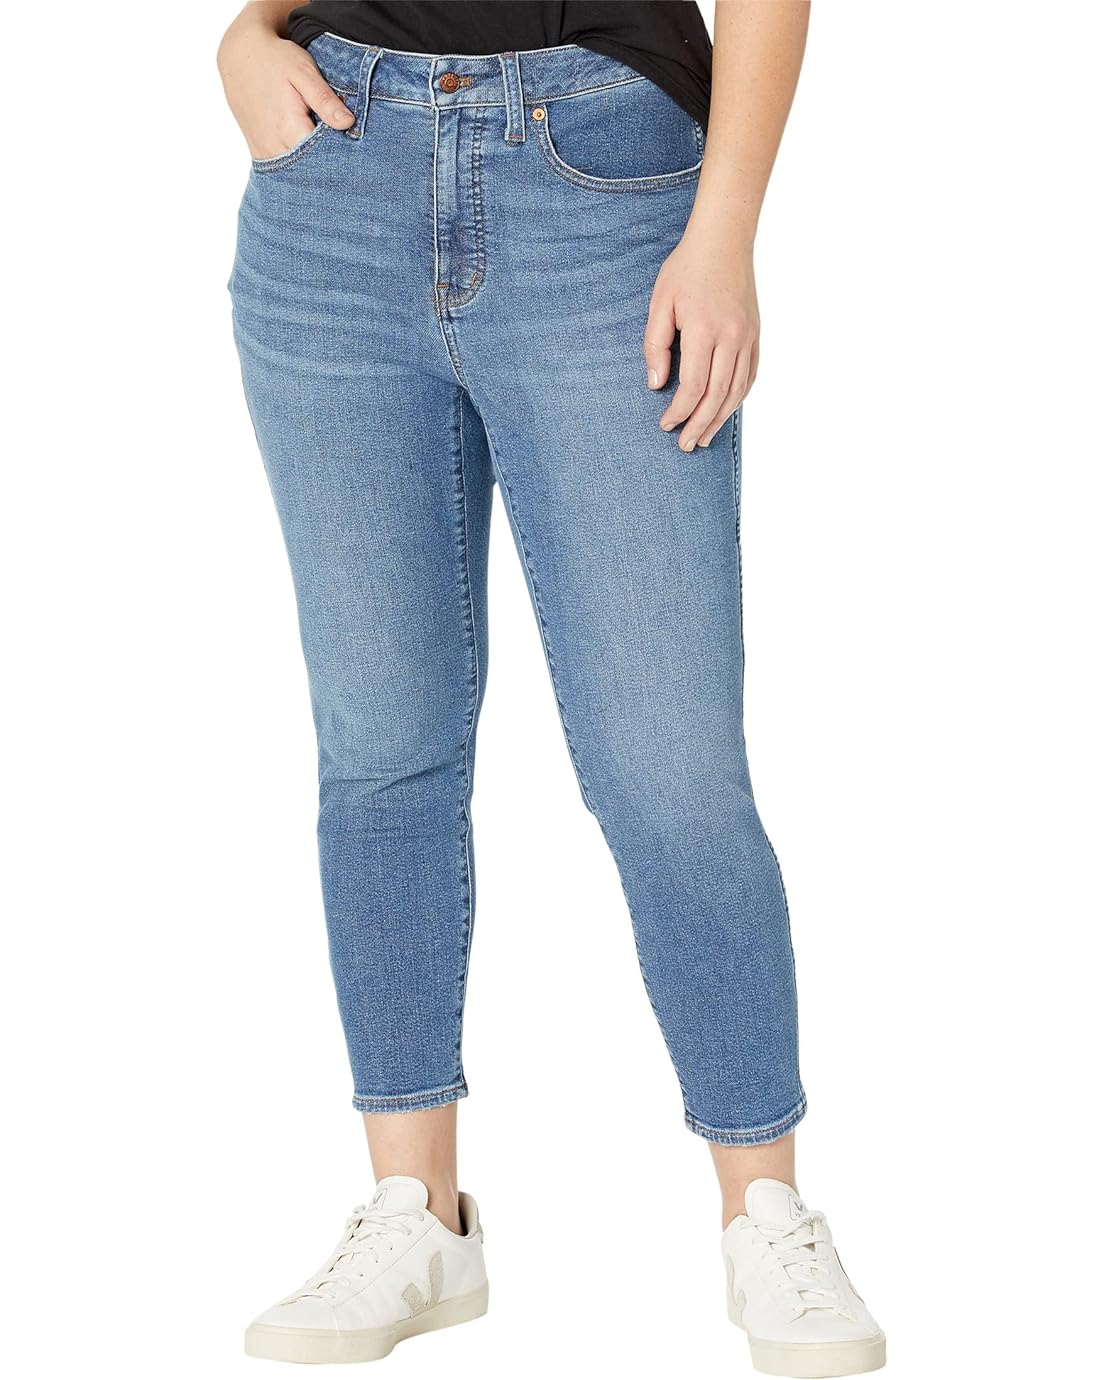 Madewell Plus 10 High-Rise Skinny Crop Jeans in Bradfield Wash